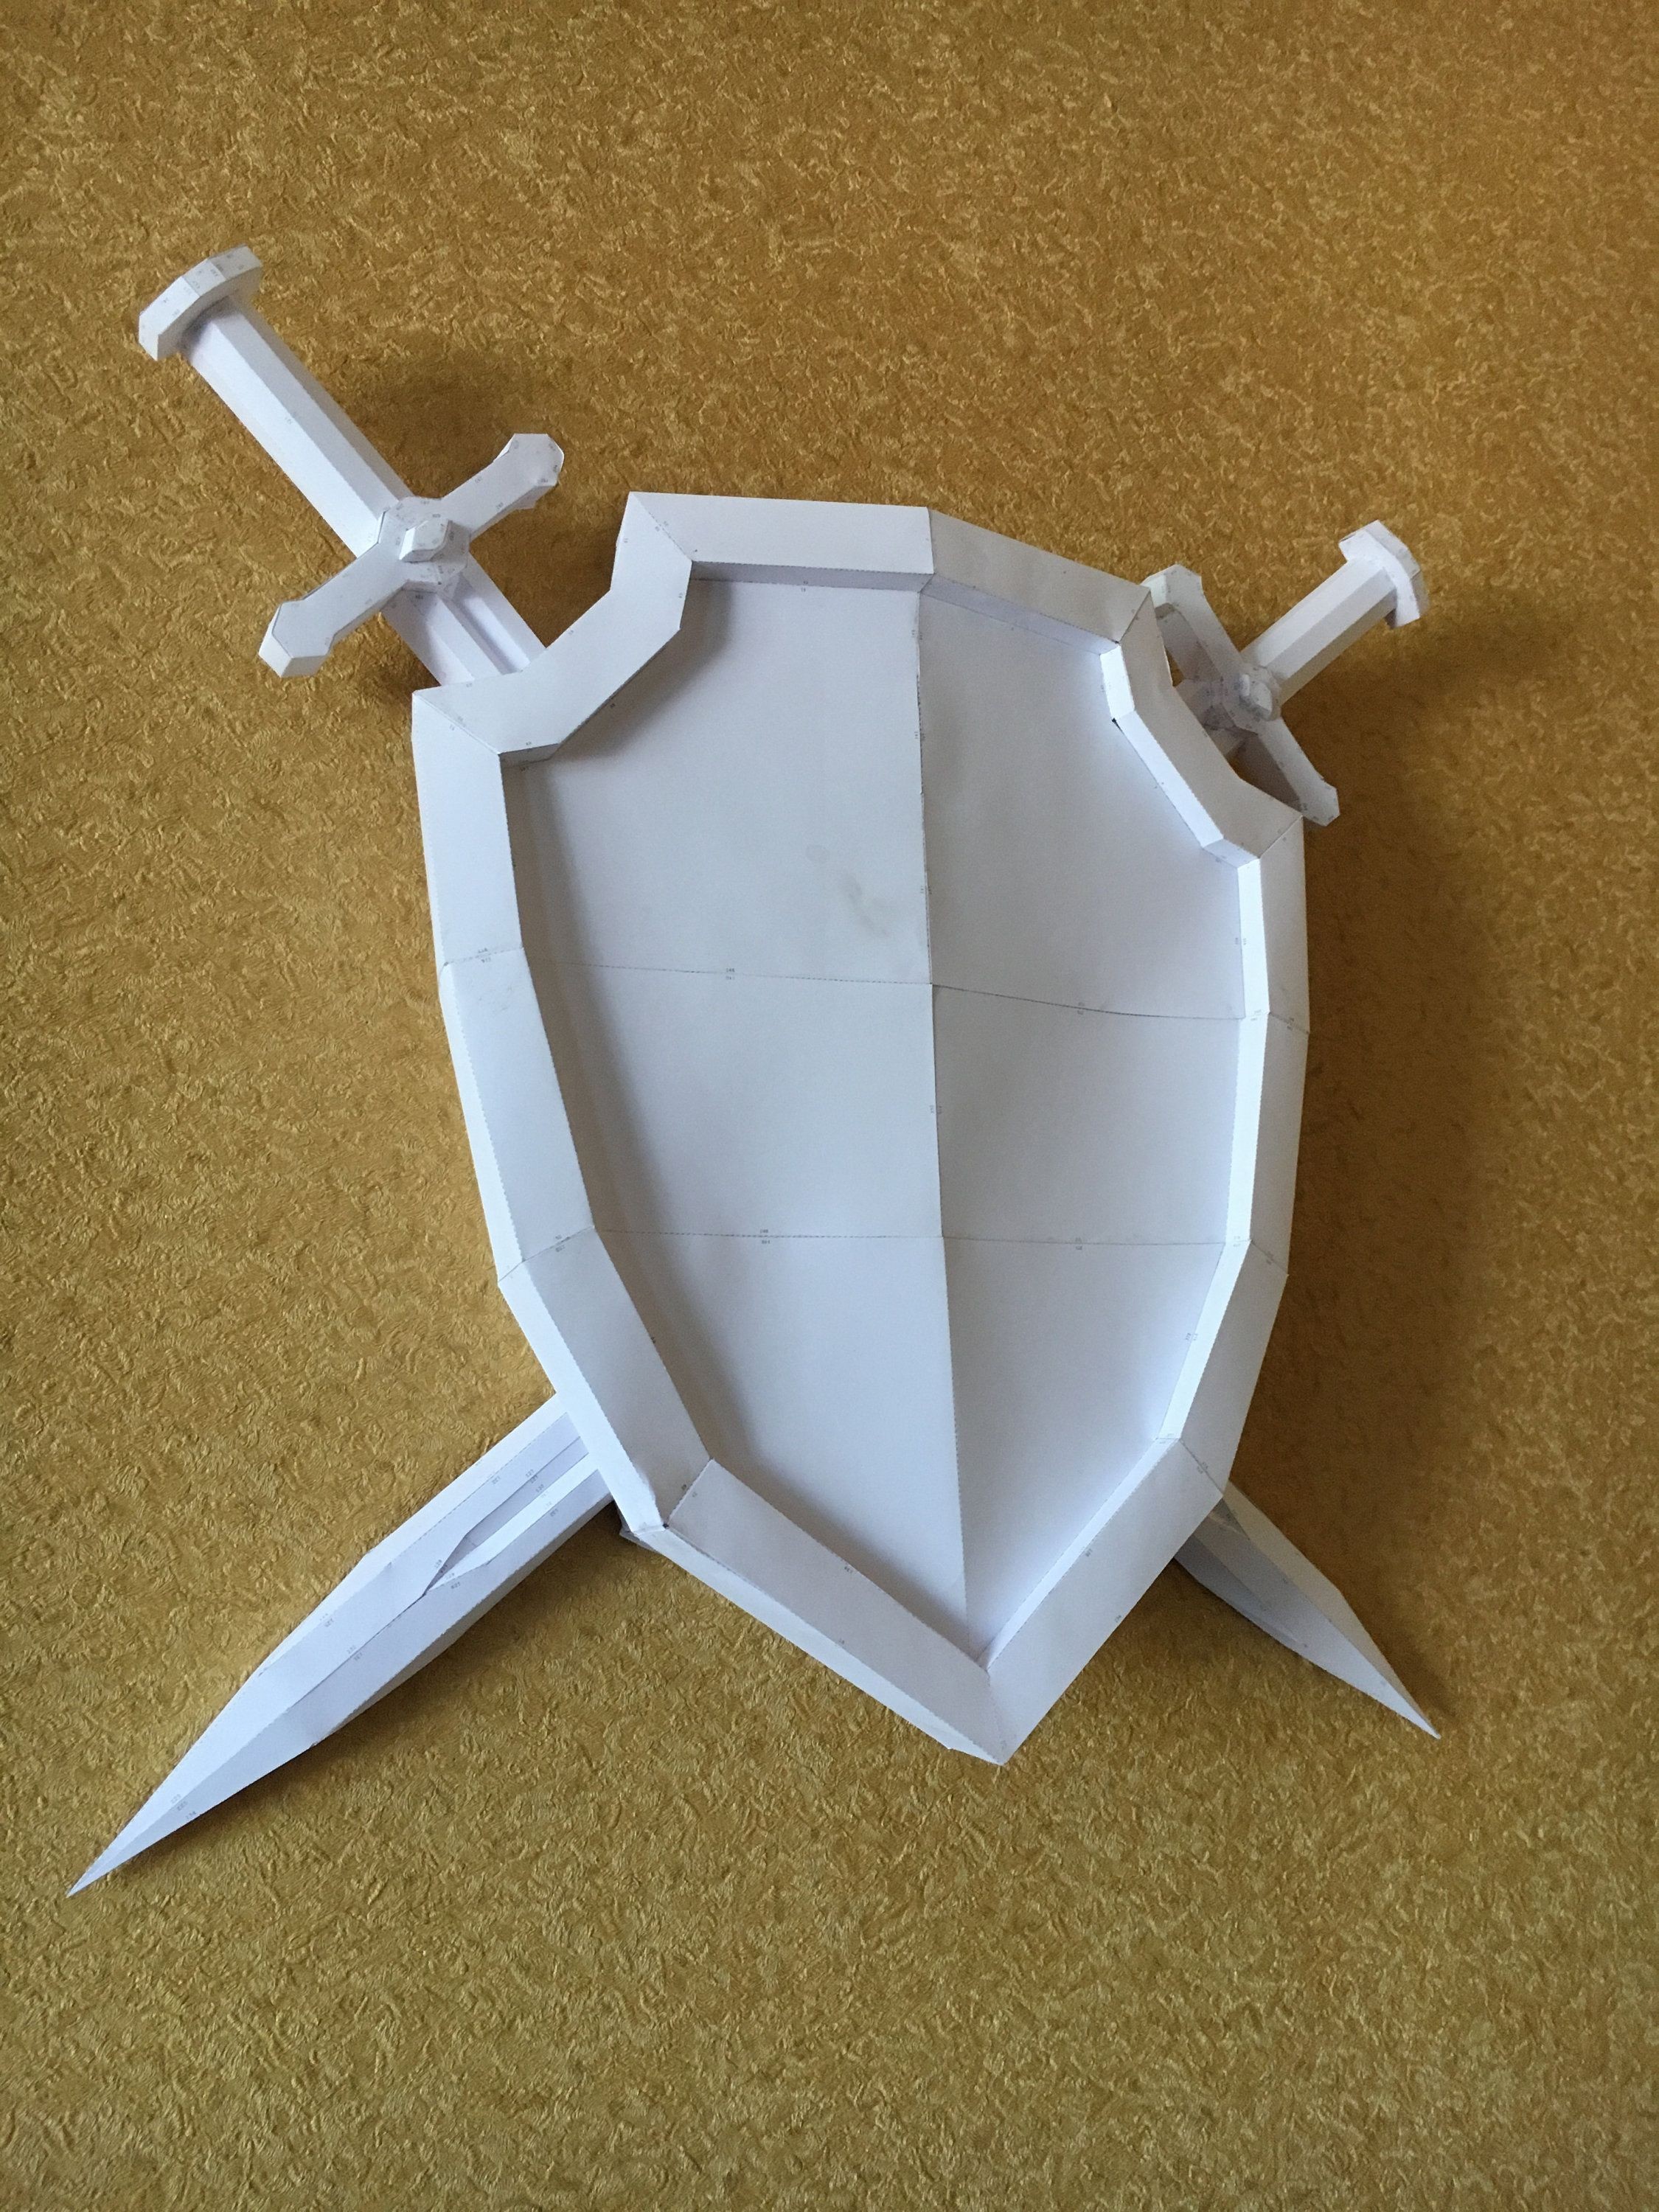 Moving Papercraft Sword Shield Diy Papercraft Model ÐÑÐ¼Ð°Ð¶Ð½ÑÐµ Ð¸Ð·Ð´ÐµÐ Ð¸Ñ